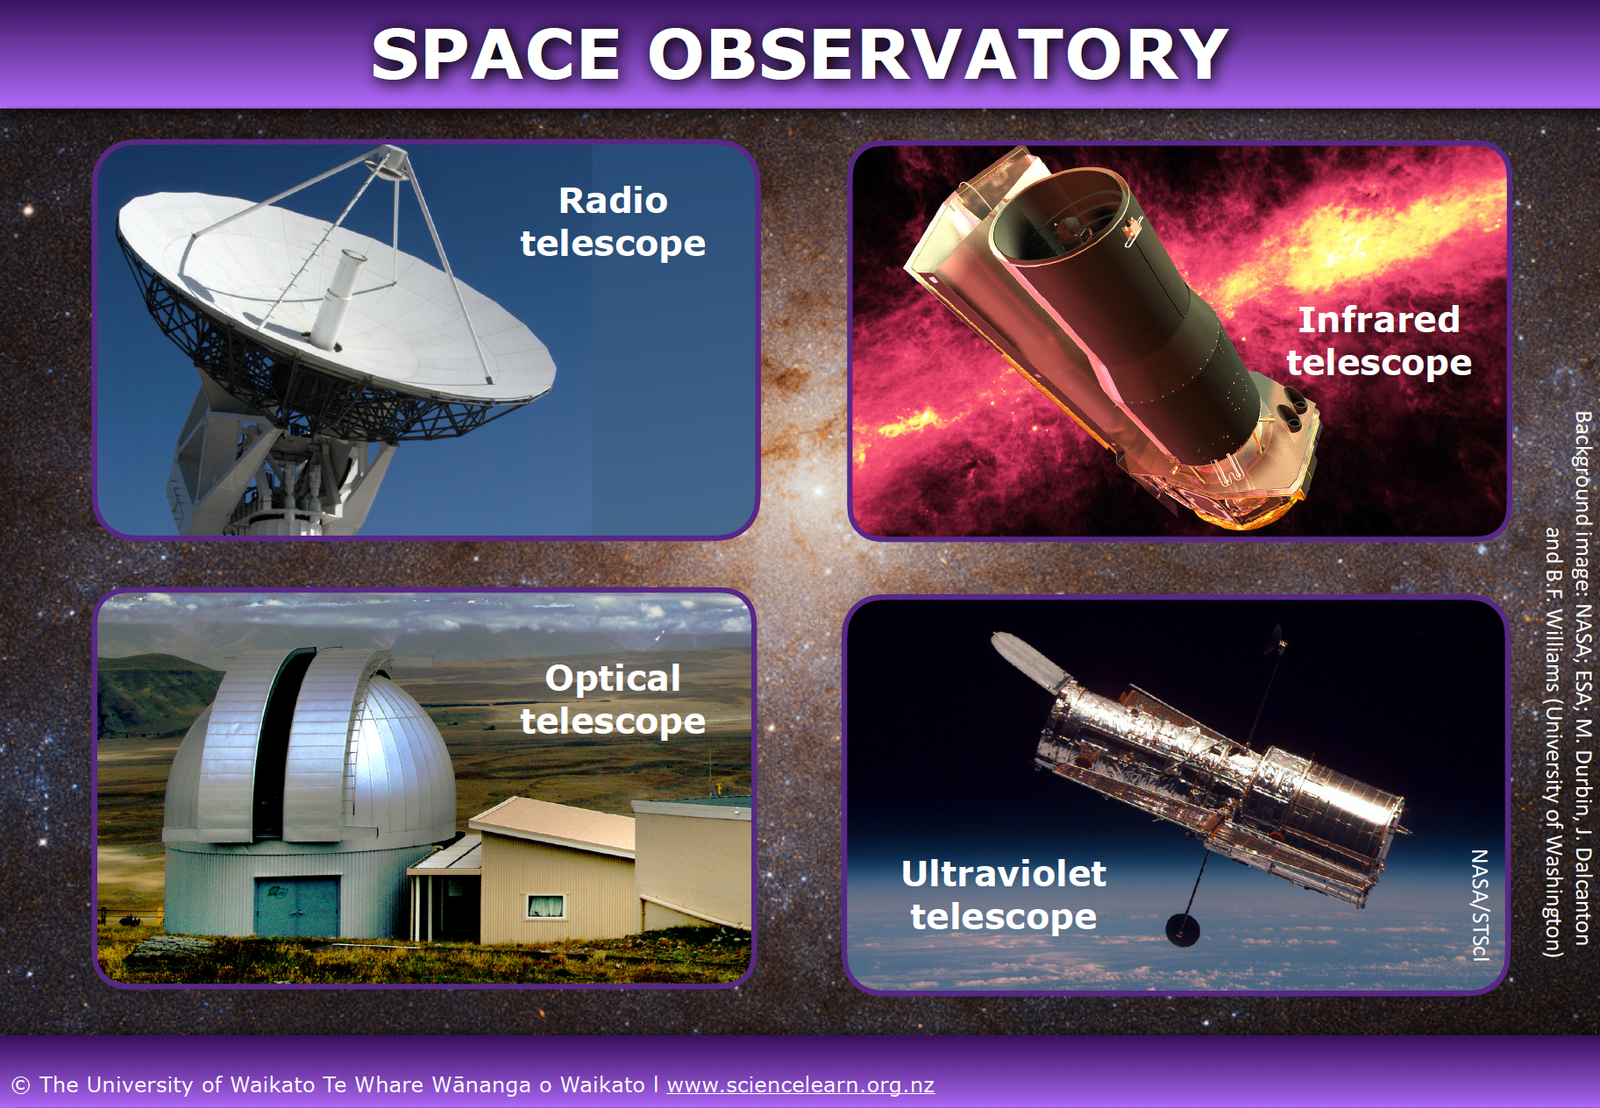 understanding the differences: radio telescopes vs optical telescopes